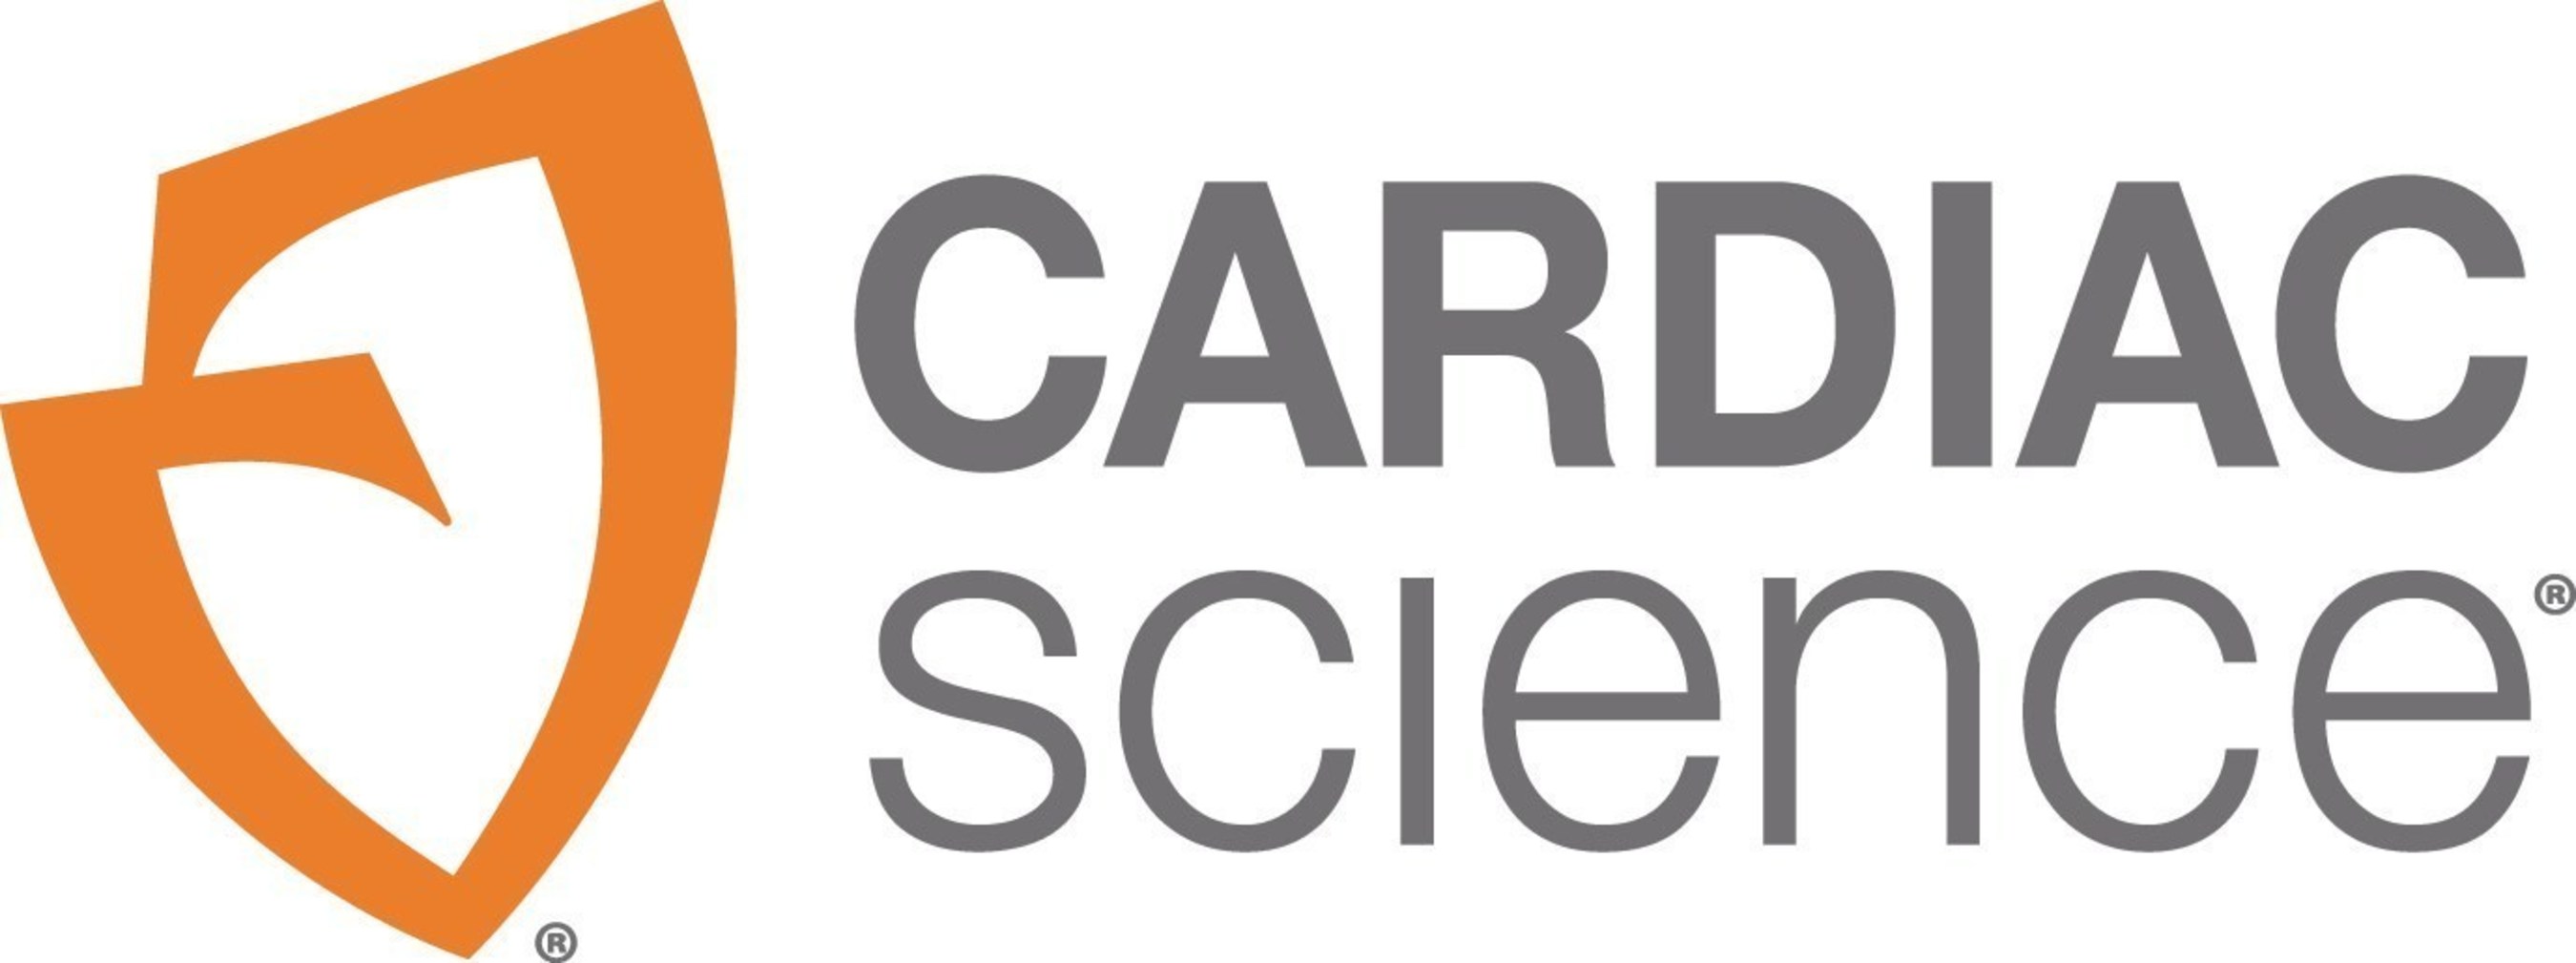 Cardiac Science Corporation is based in Waukesha, Wisconsin.